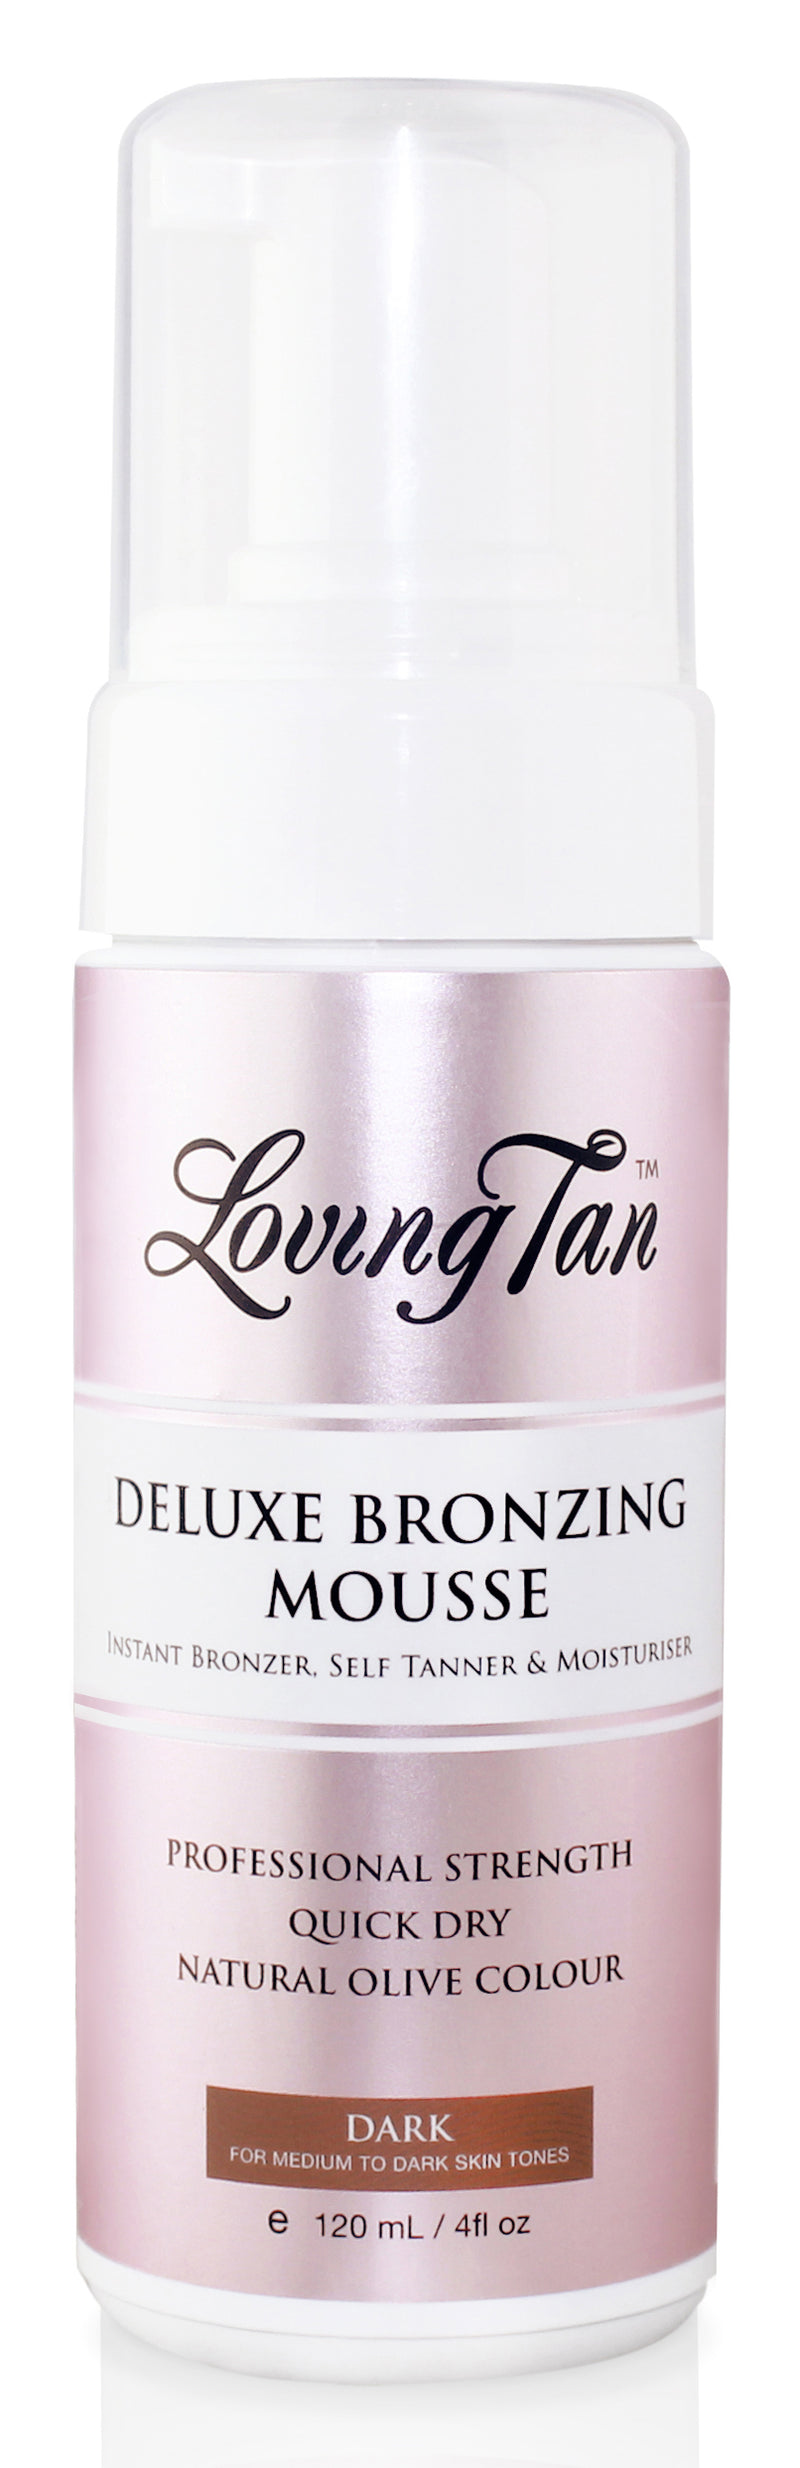 Loving Tan Deluxe Bronzing Mousse Dark for Self Tanning